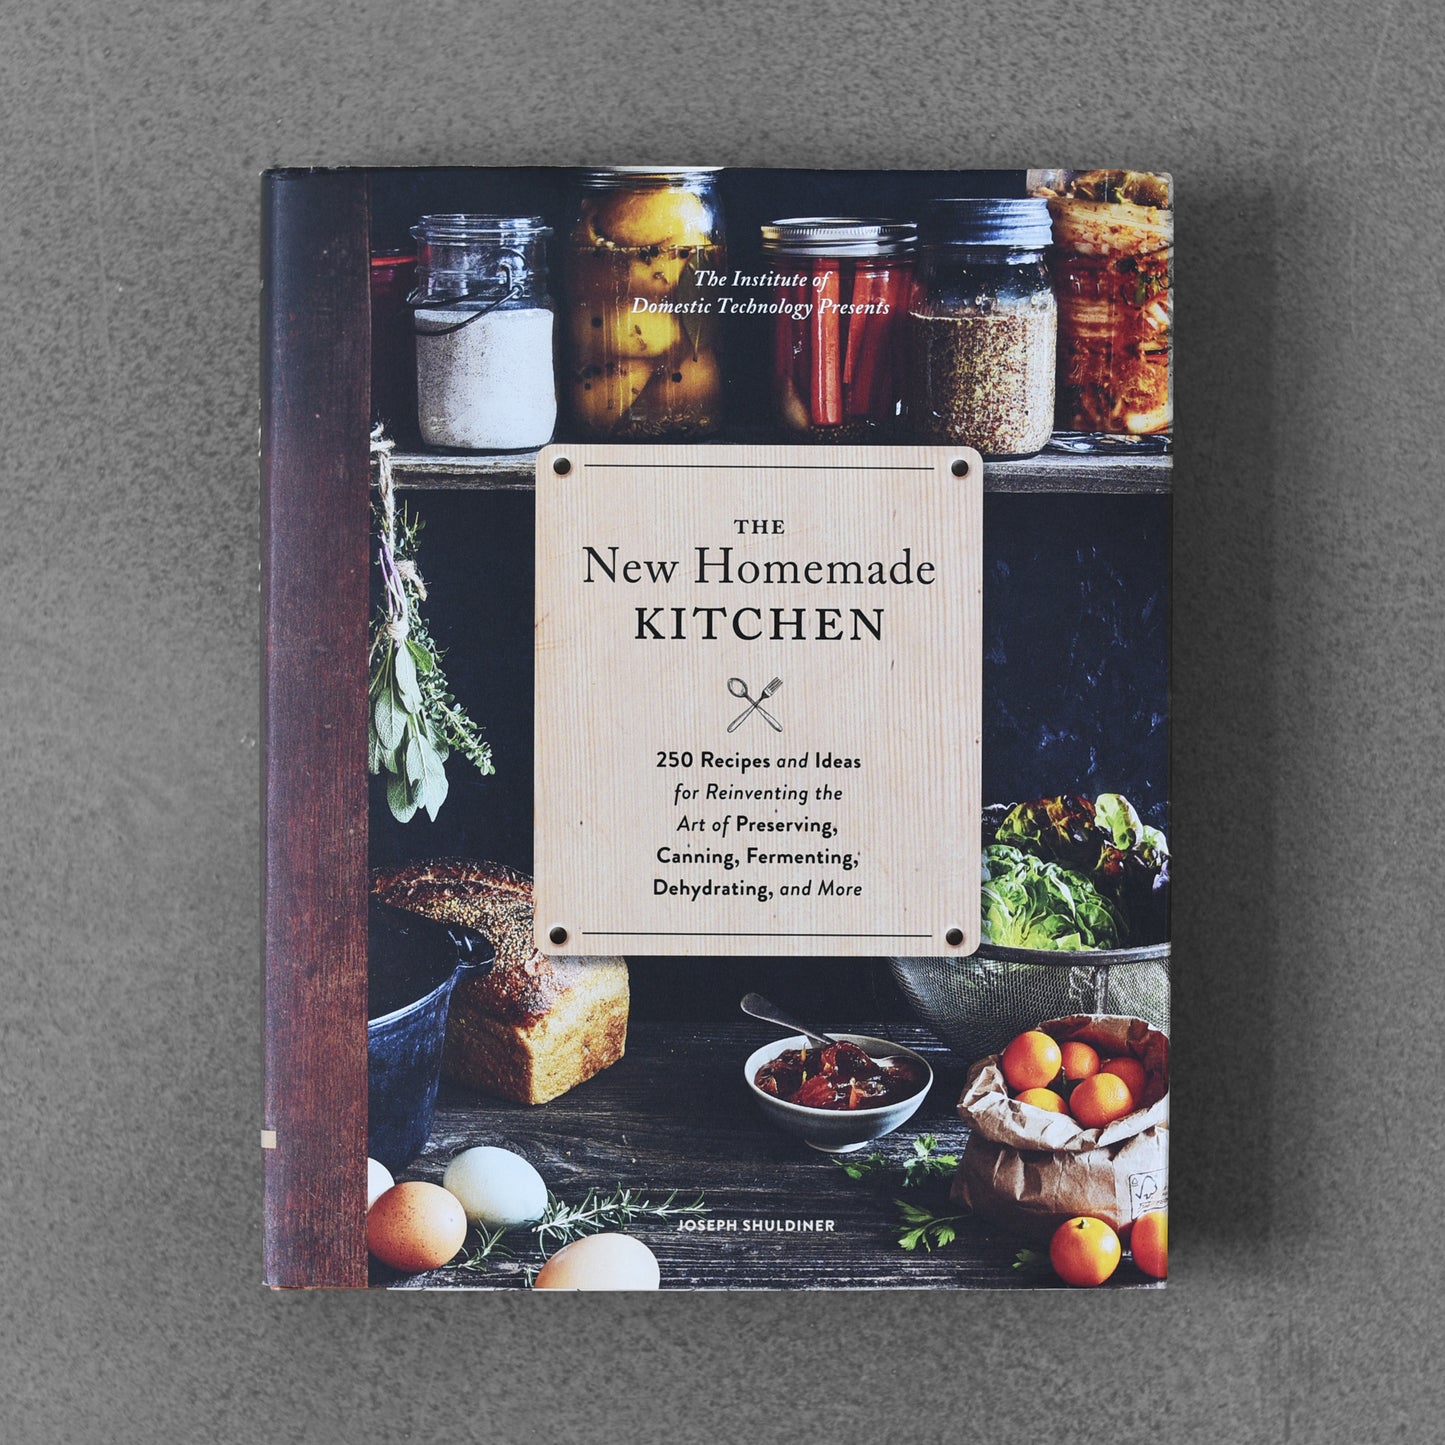 The New Homemade Kitchen - Joseph Shuldiner